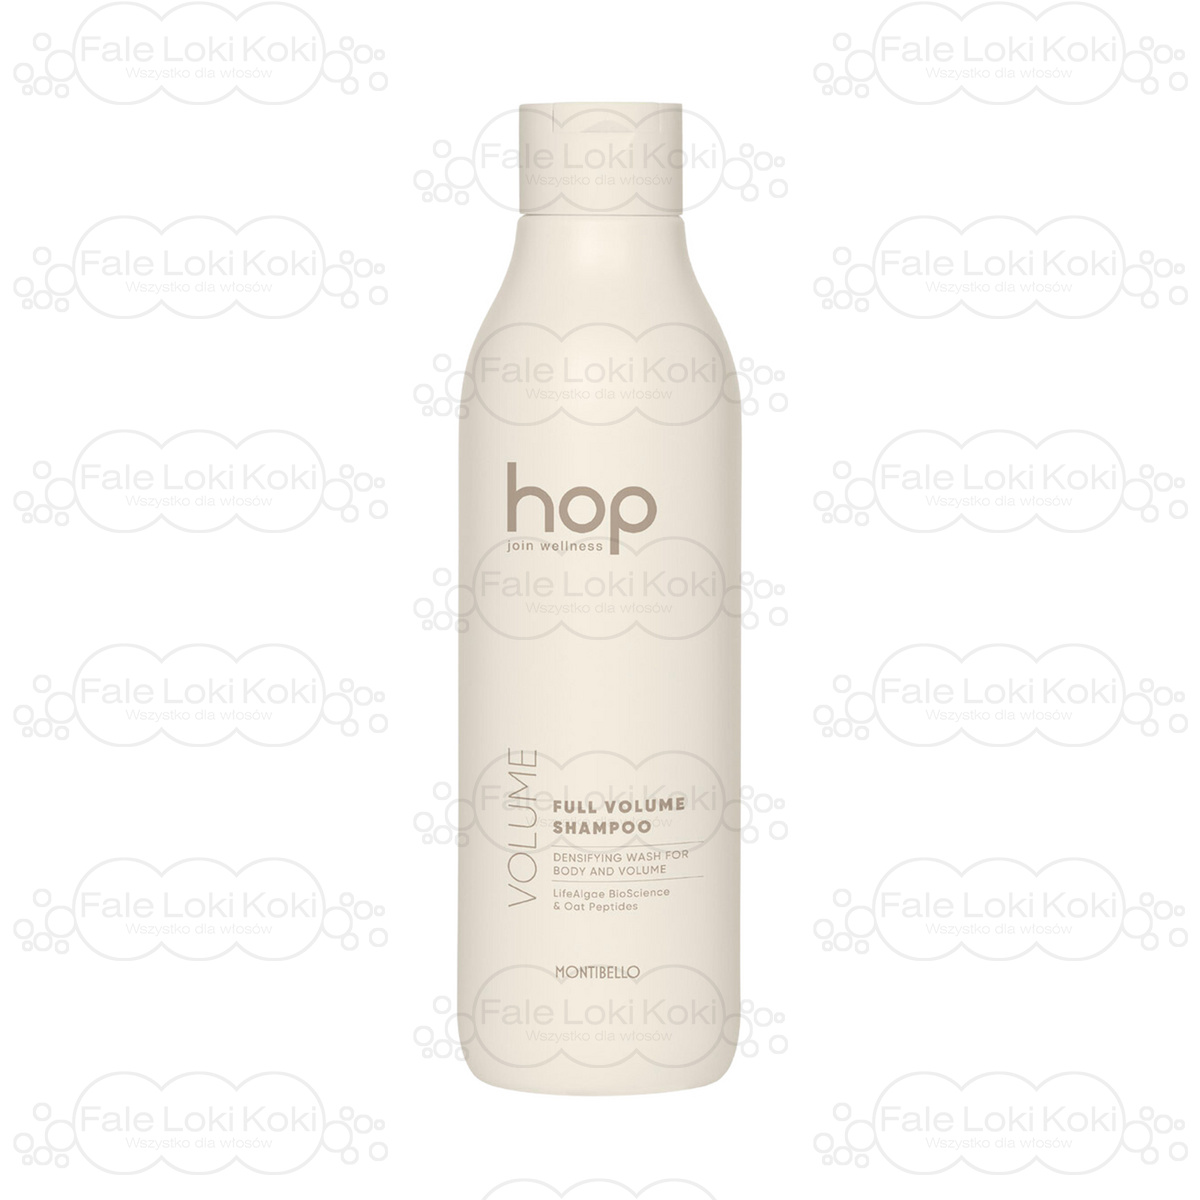 MONTIBELLO HOP szampon do włosów Full Volume Shampoo 1000 ml